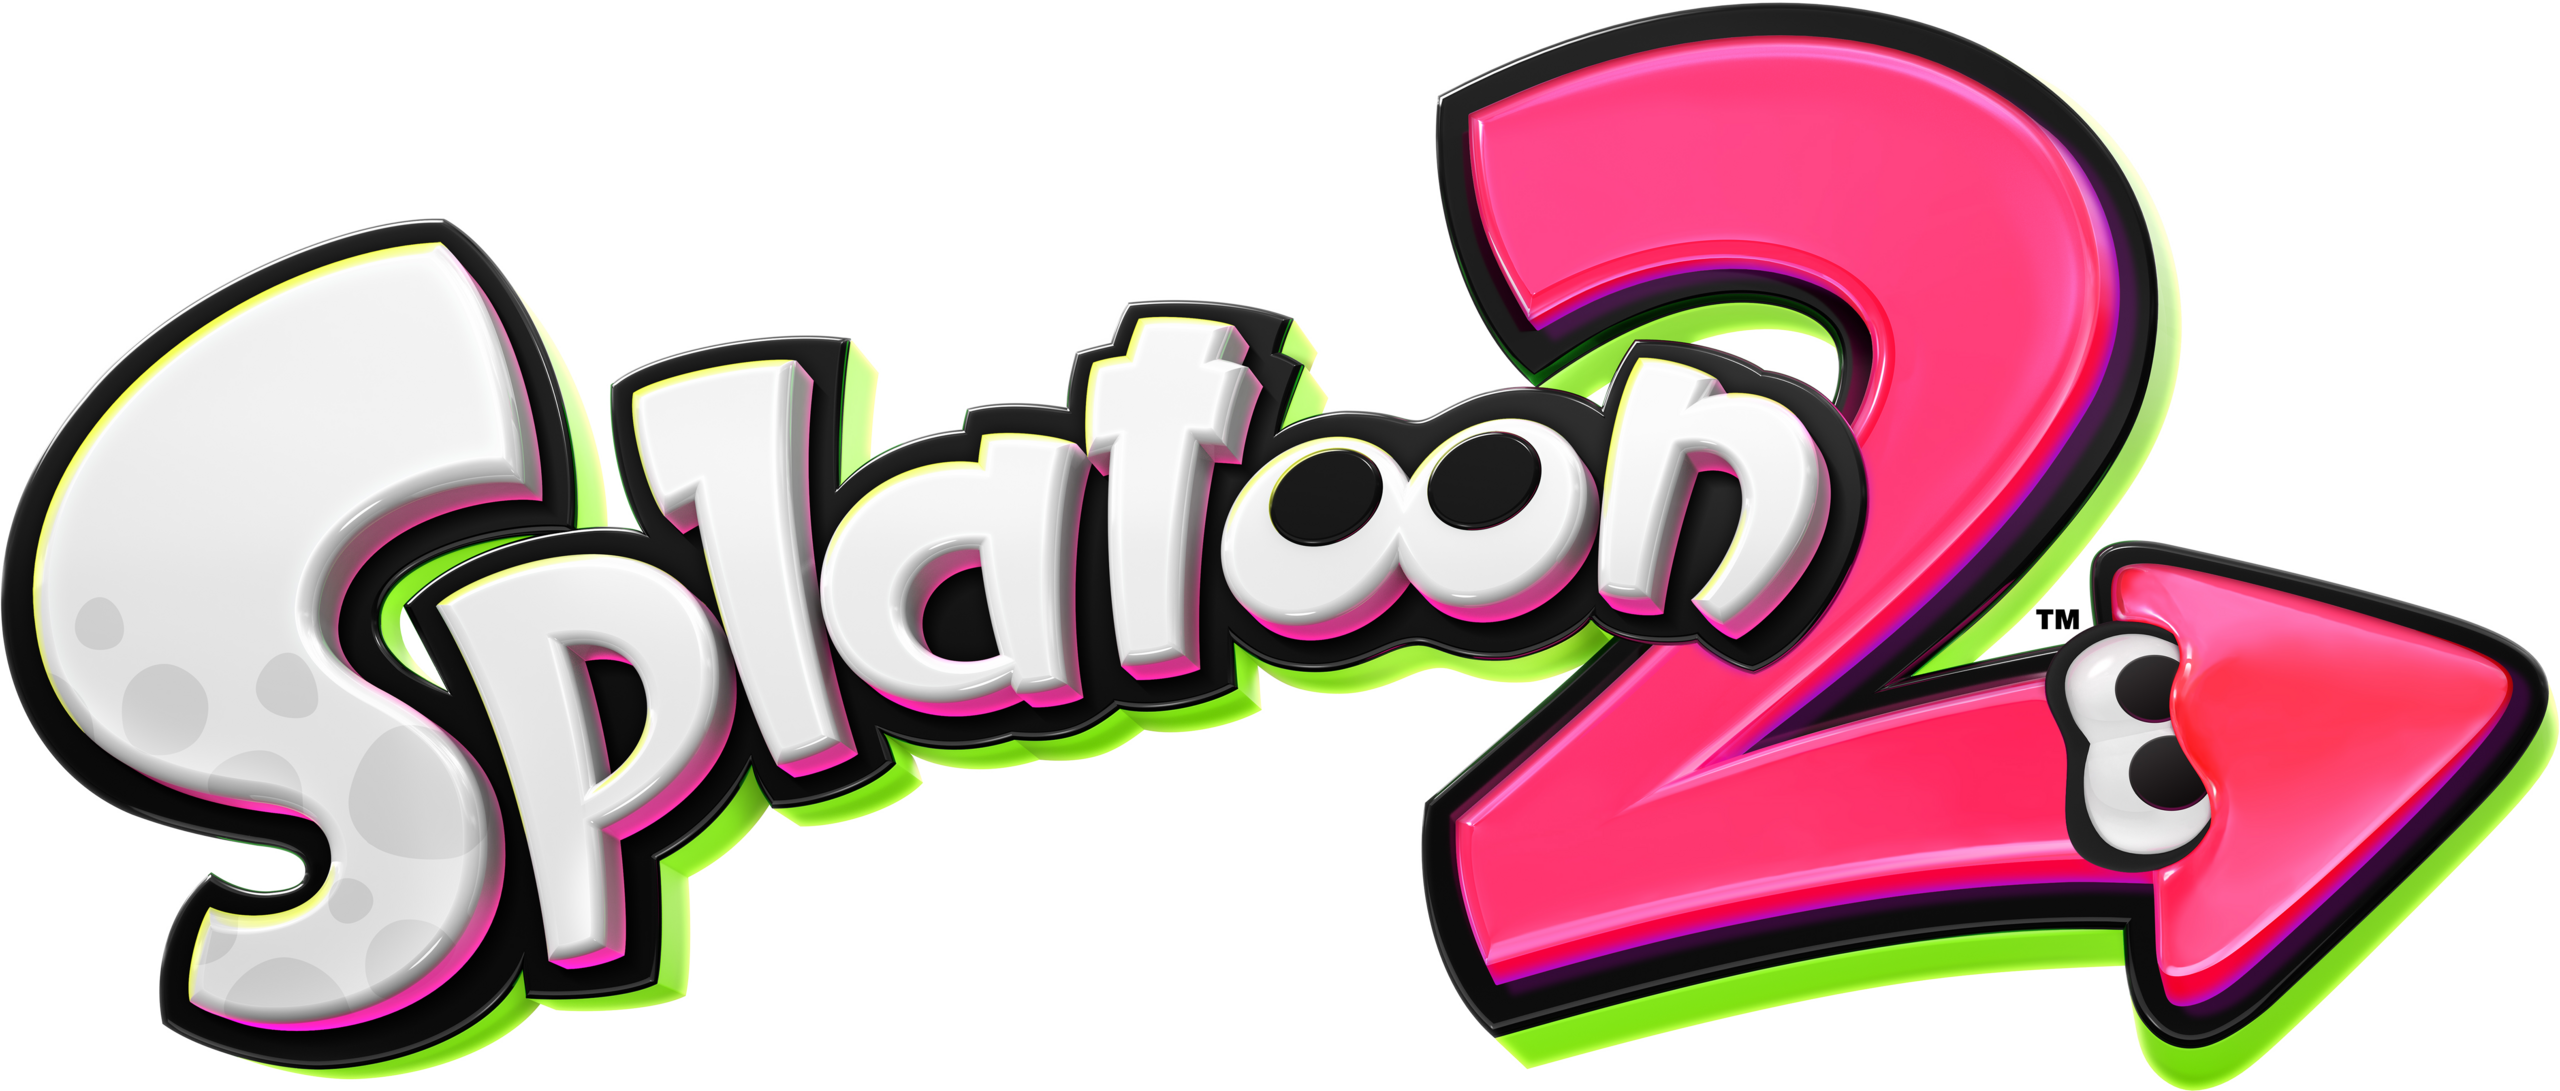 Splatoon_2_logo.png